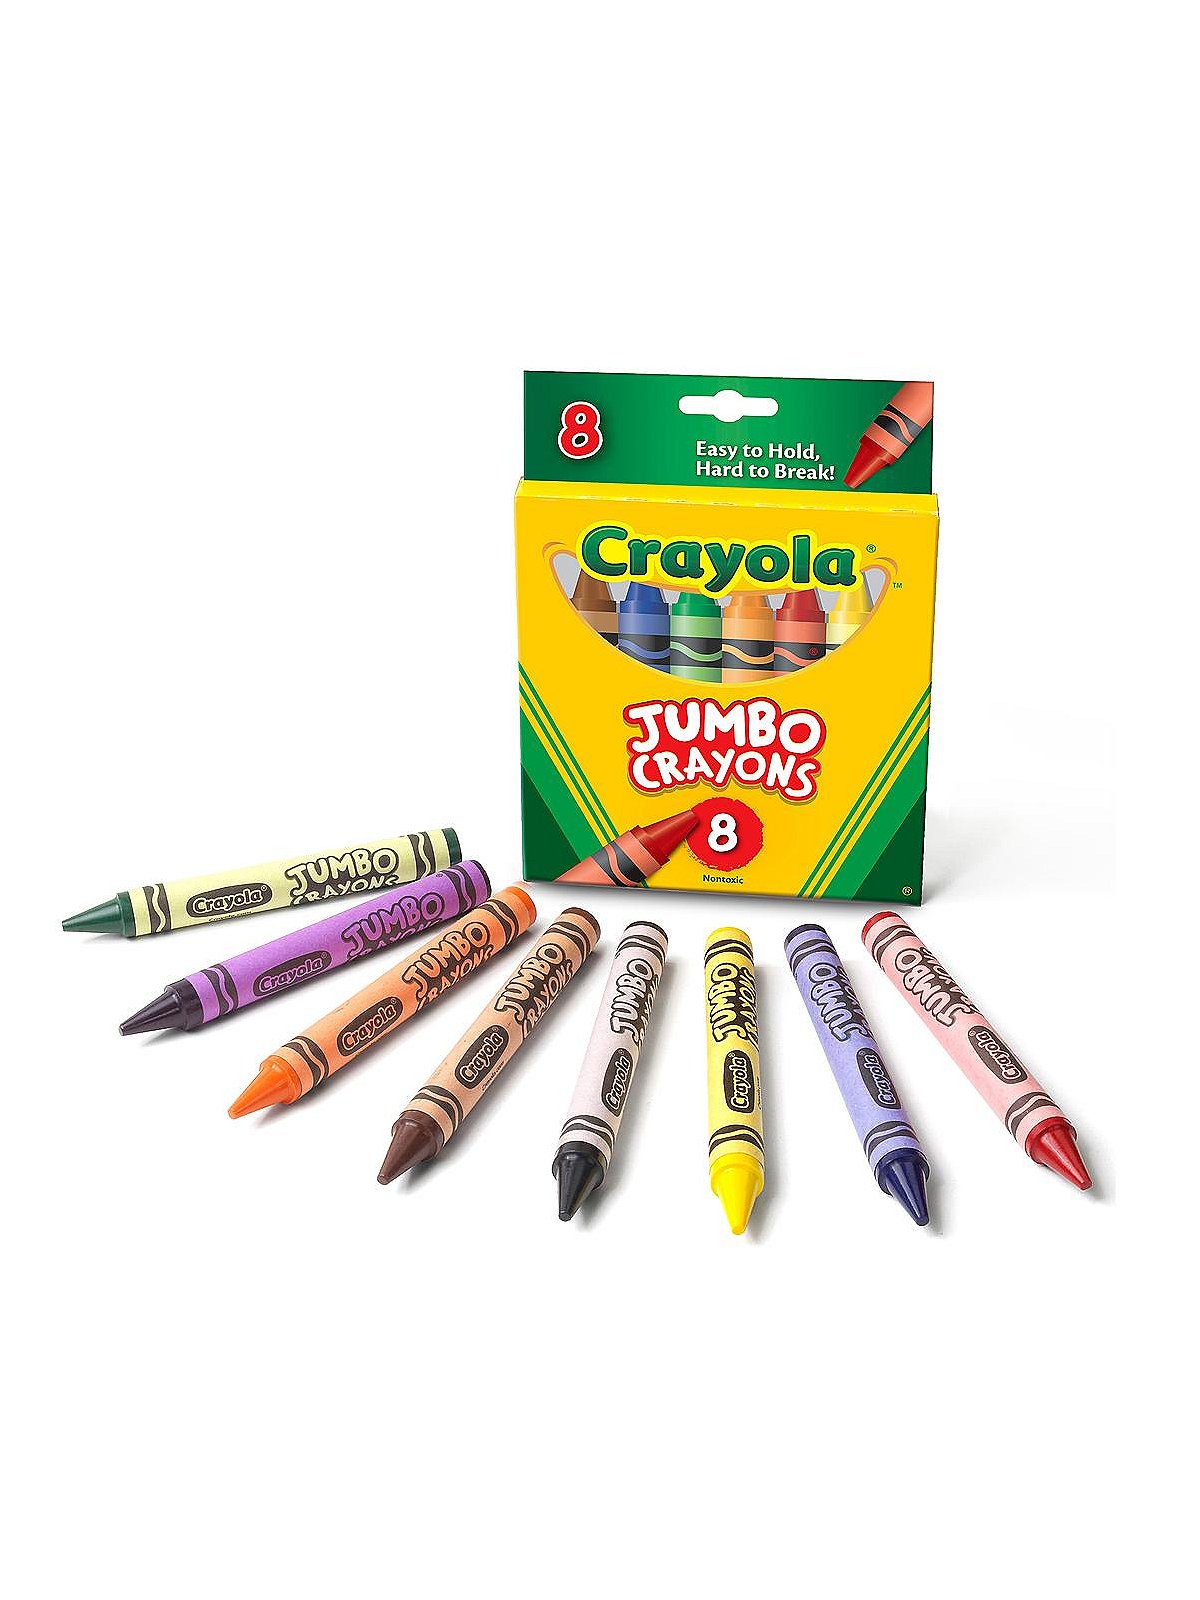 Crayola - Giant Box of Crayon - Crayola Giant Box of Crayons